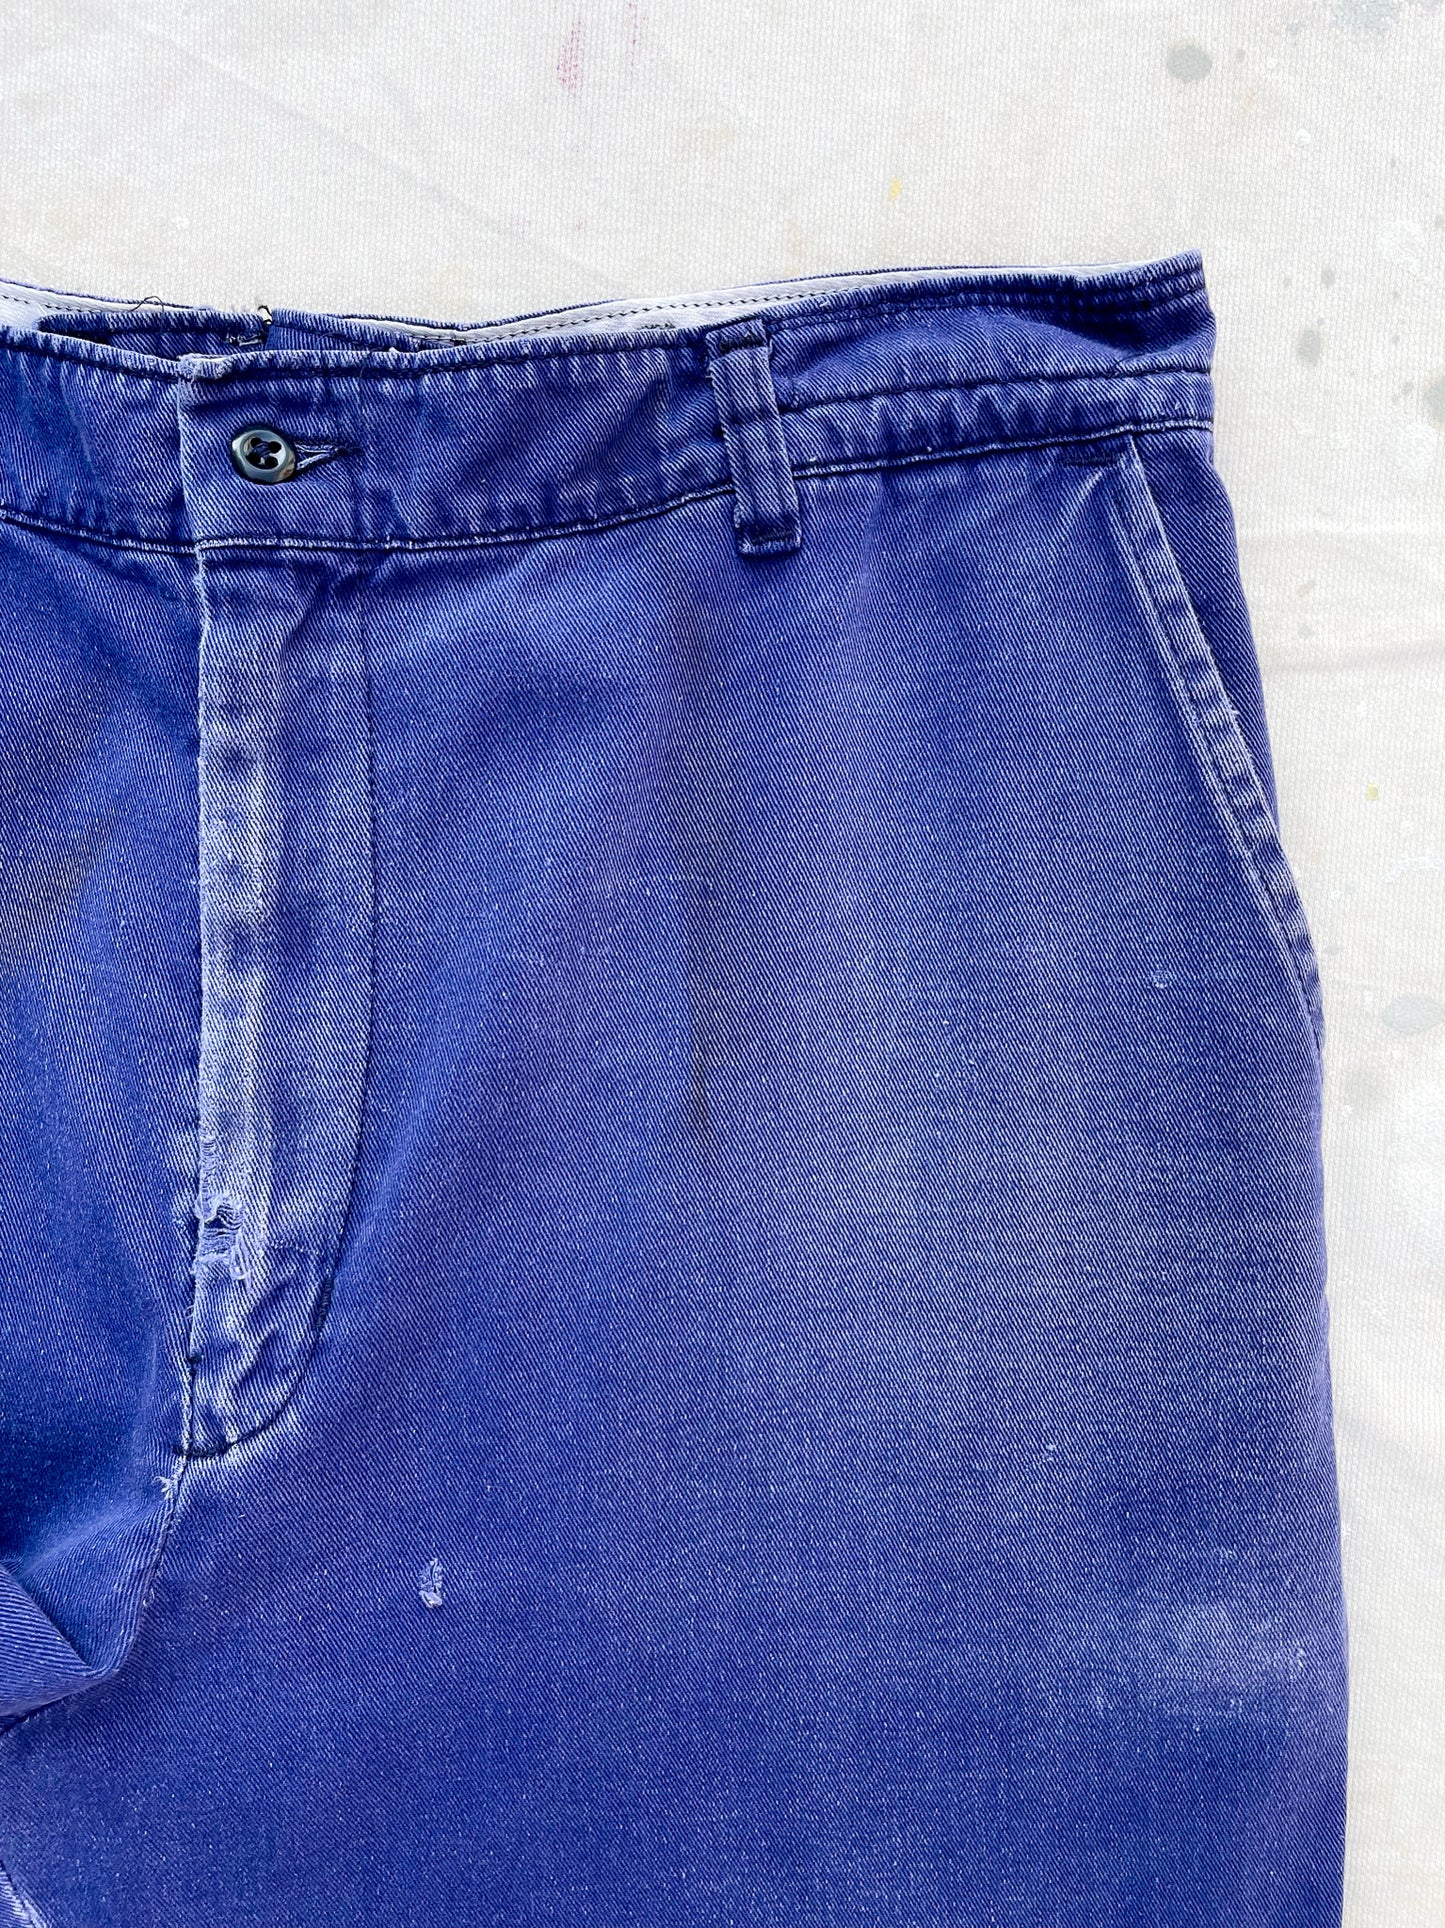 Purple Indigo French Work Pants—[34x31]